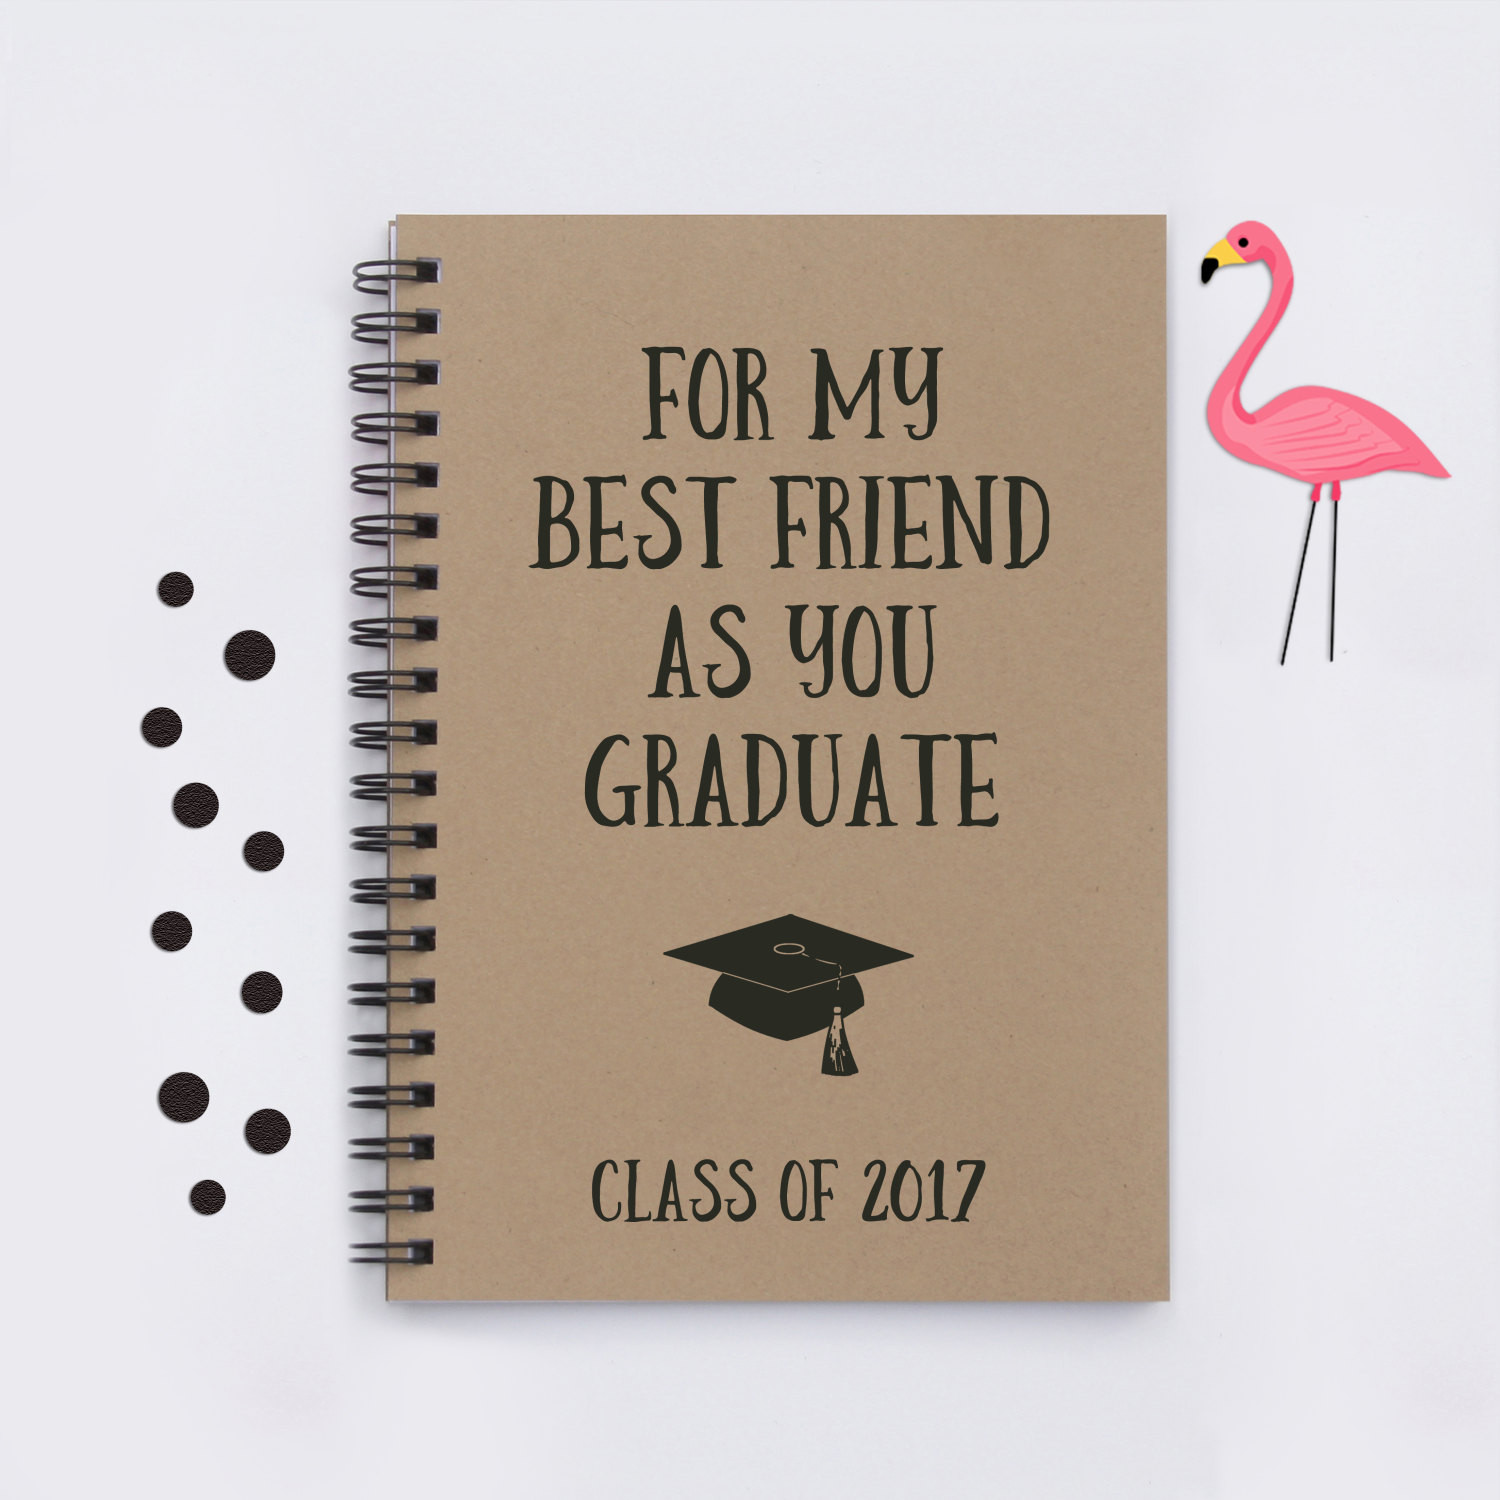 Graduation Gift Ideas For Your Best Friend
 Best friend graduation For my Best Friend as you Graduate